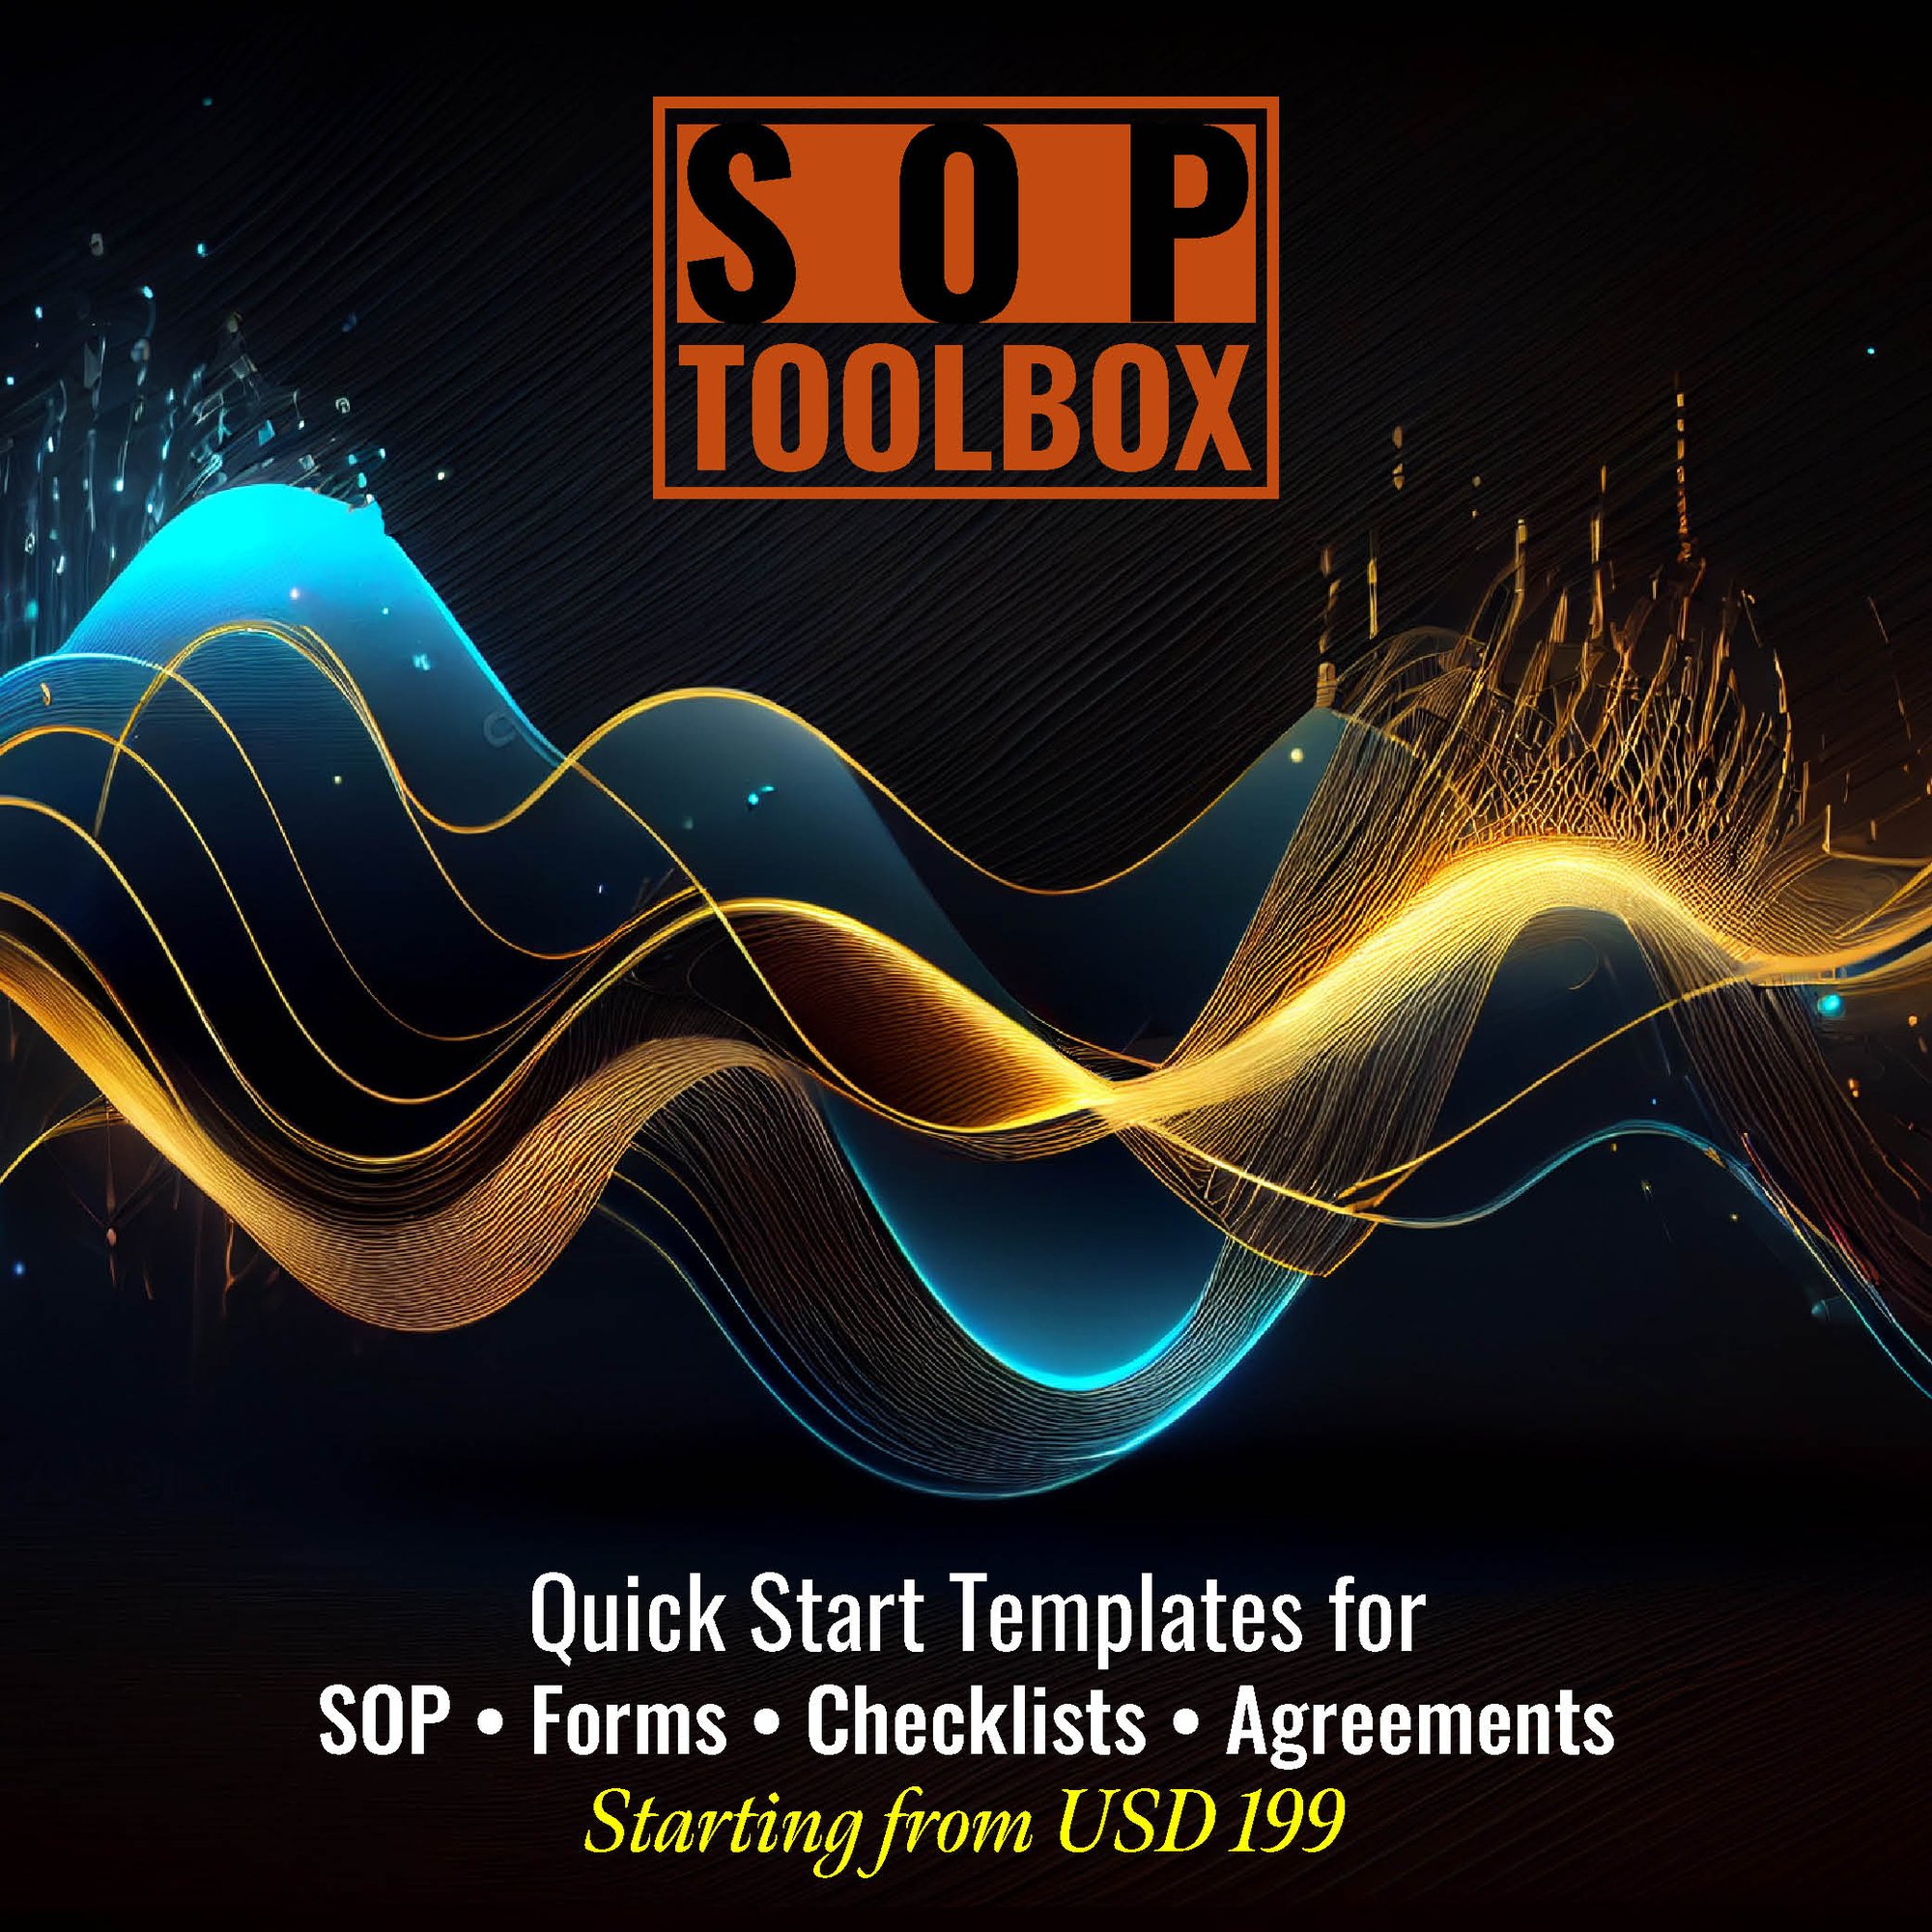 SOP ToolBox Side Image